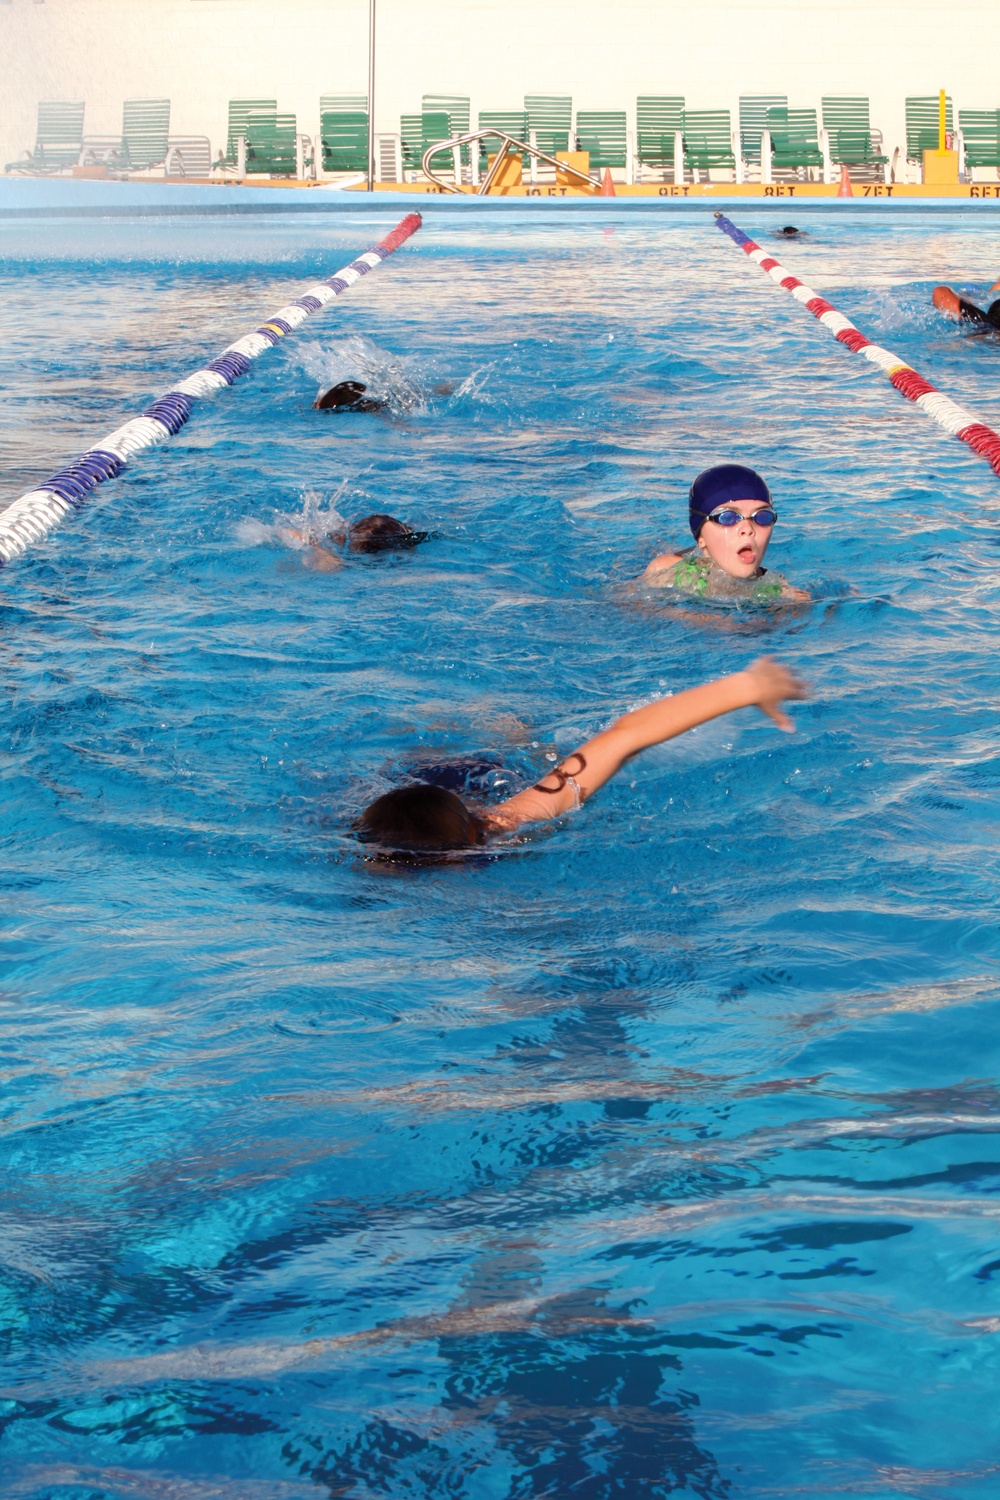 Summer aquathlon brings friendly competition